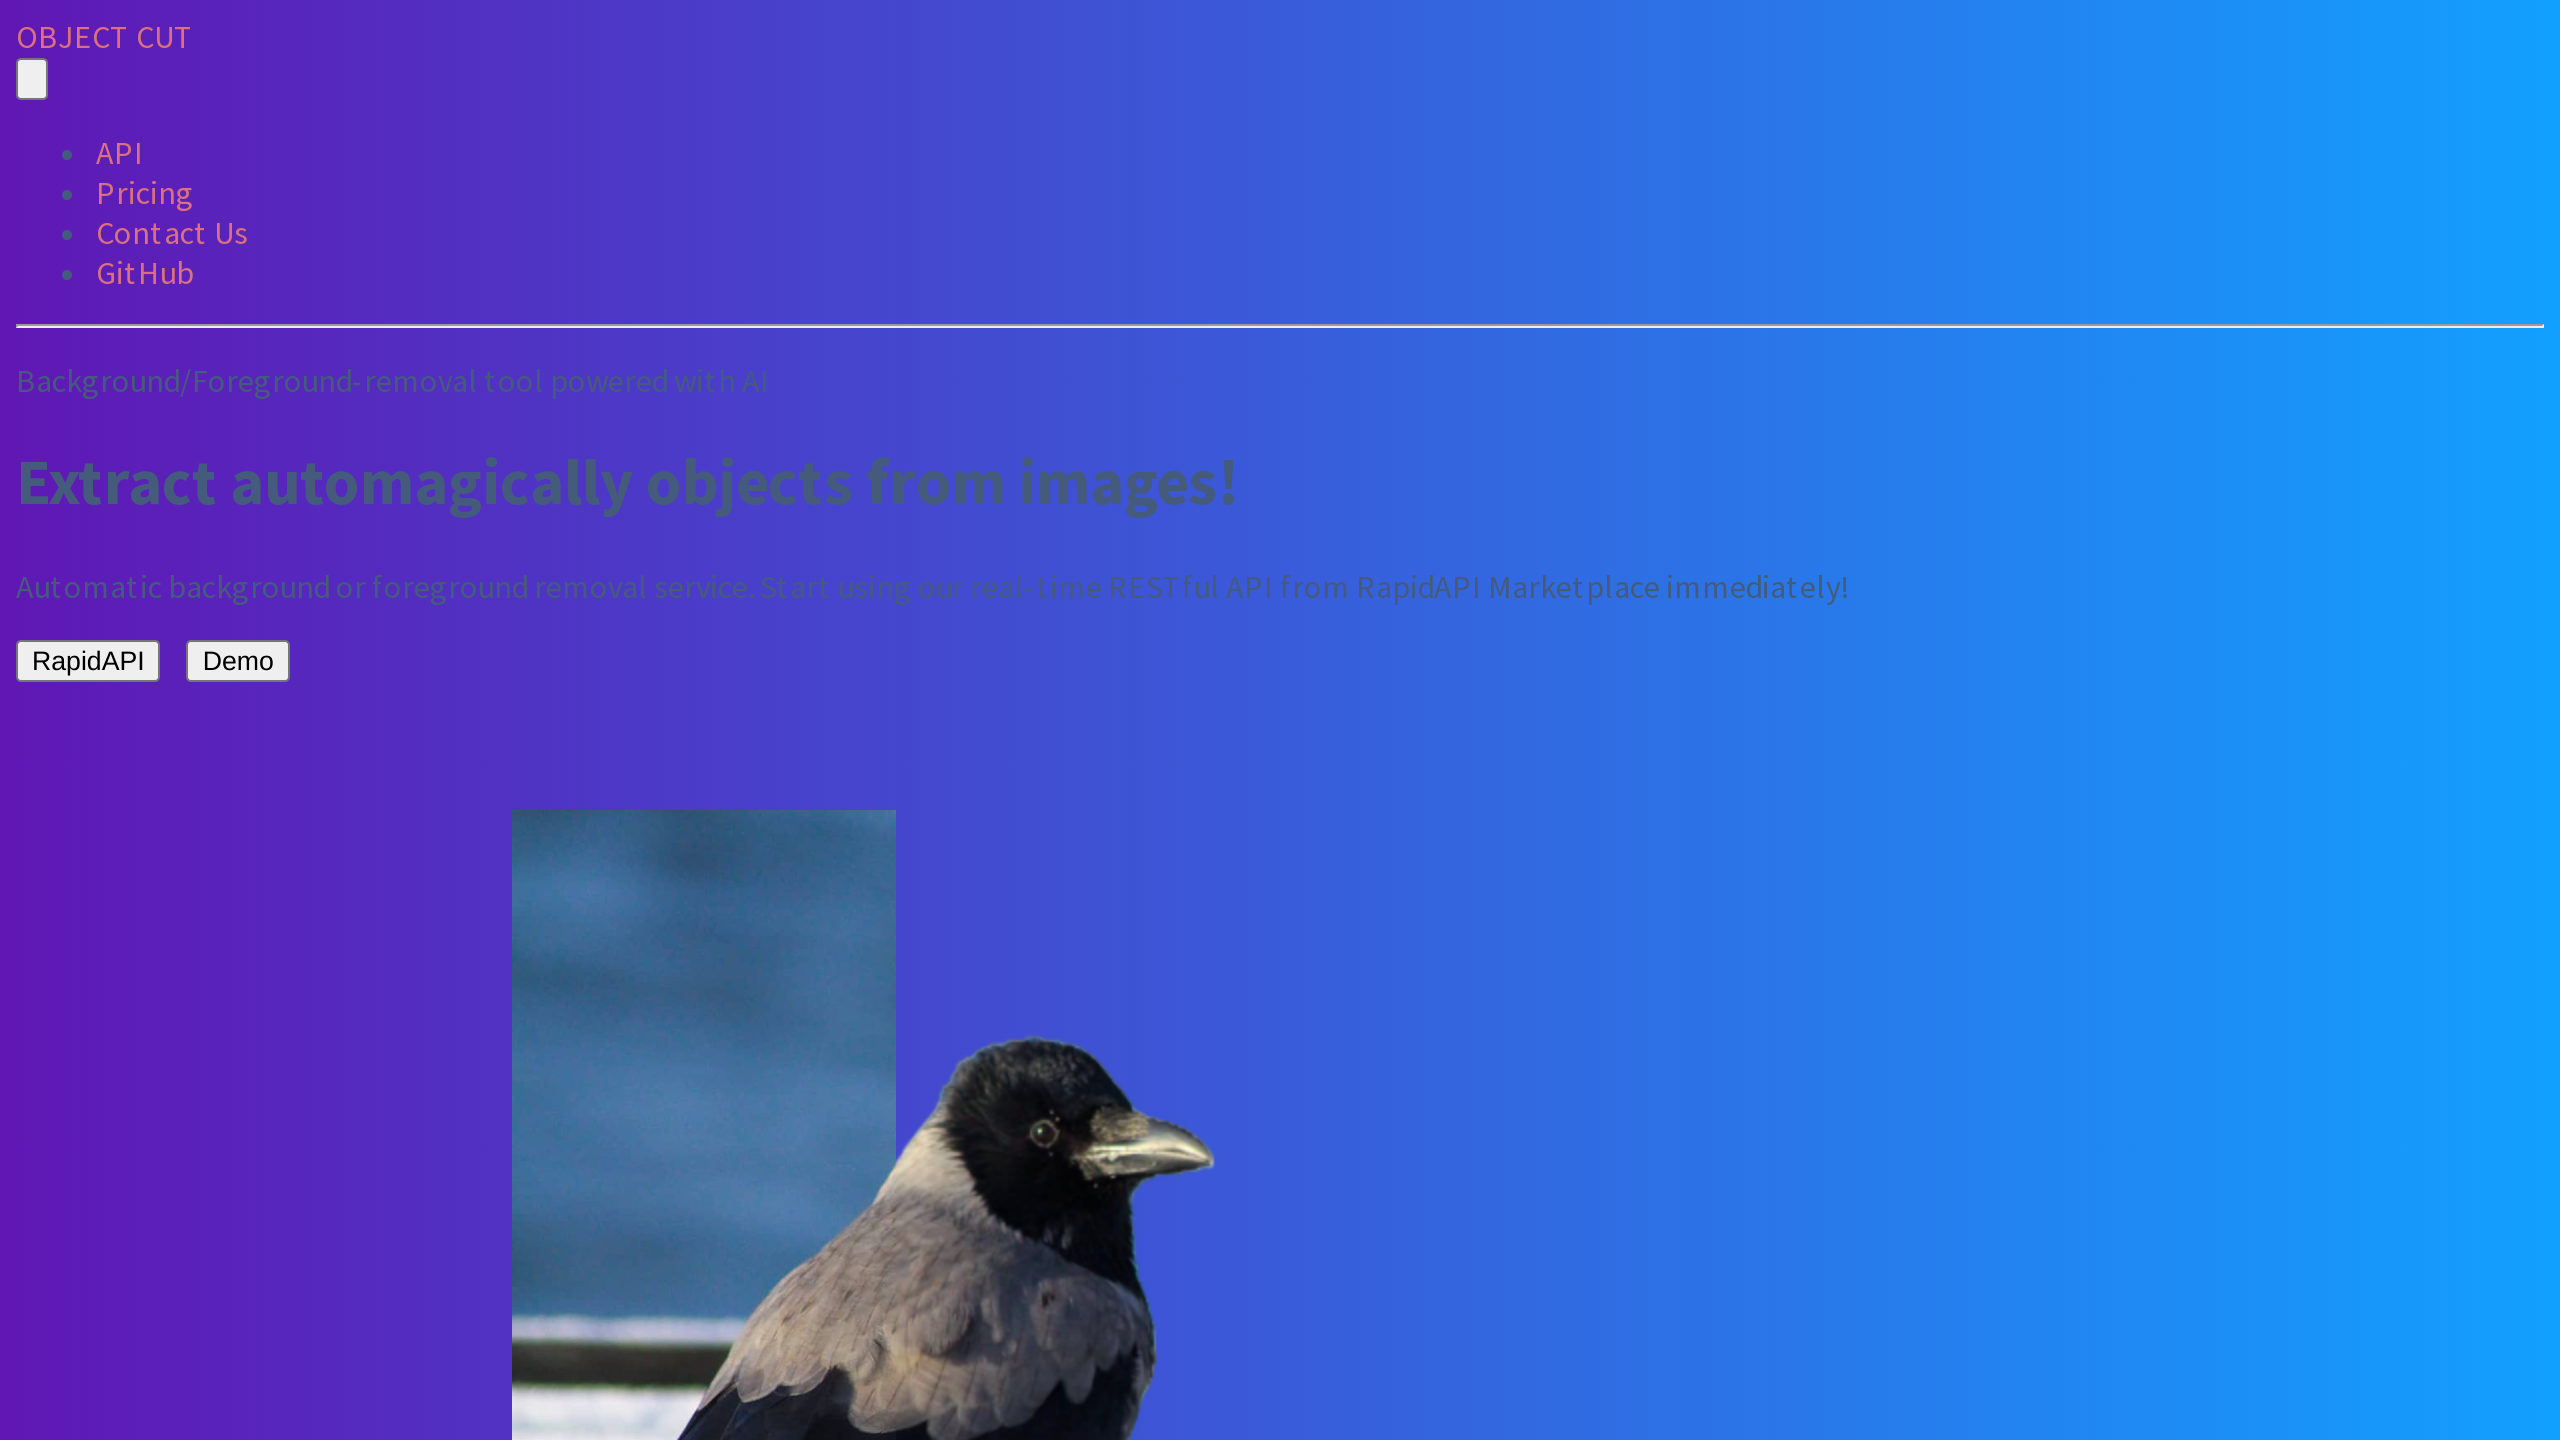 ObjectCut's website screenshot